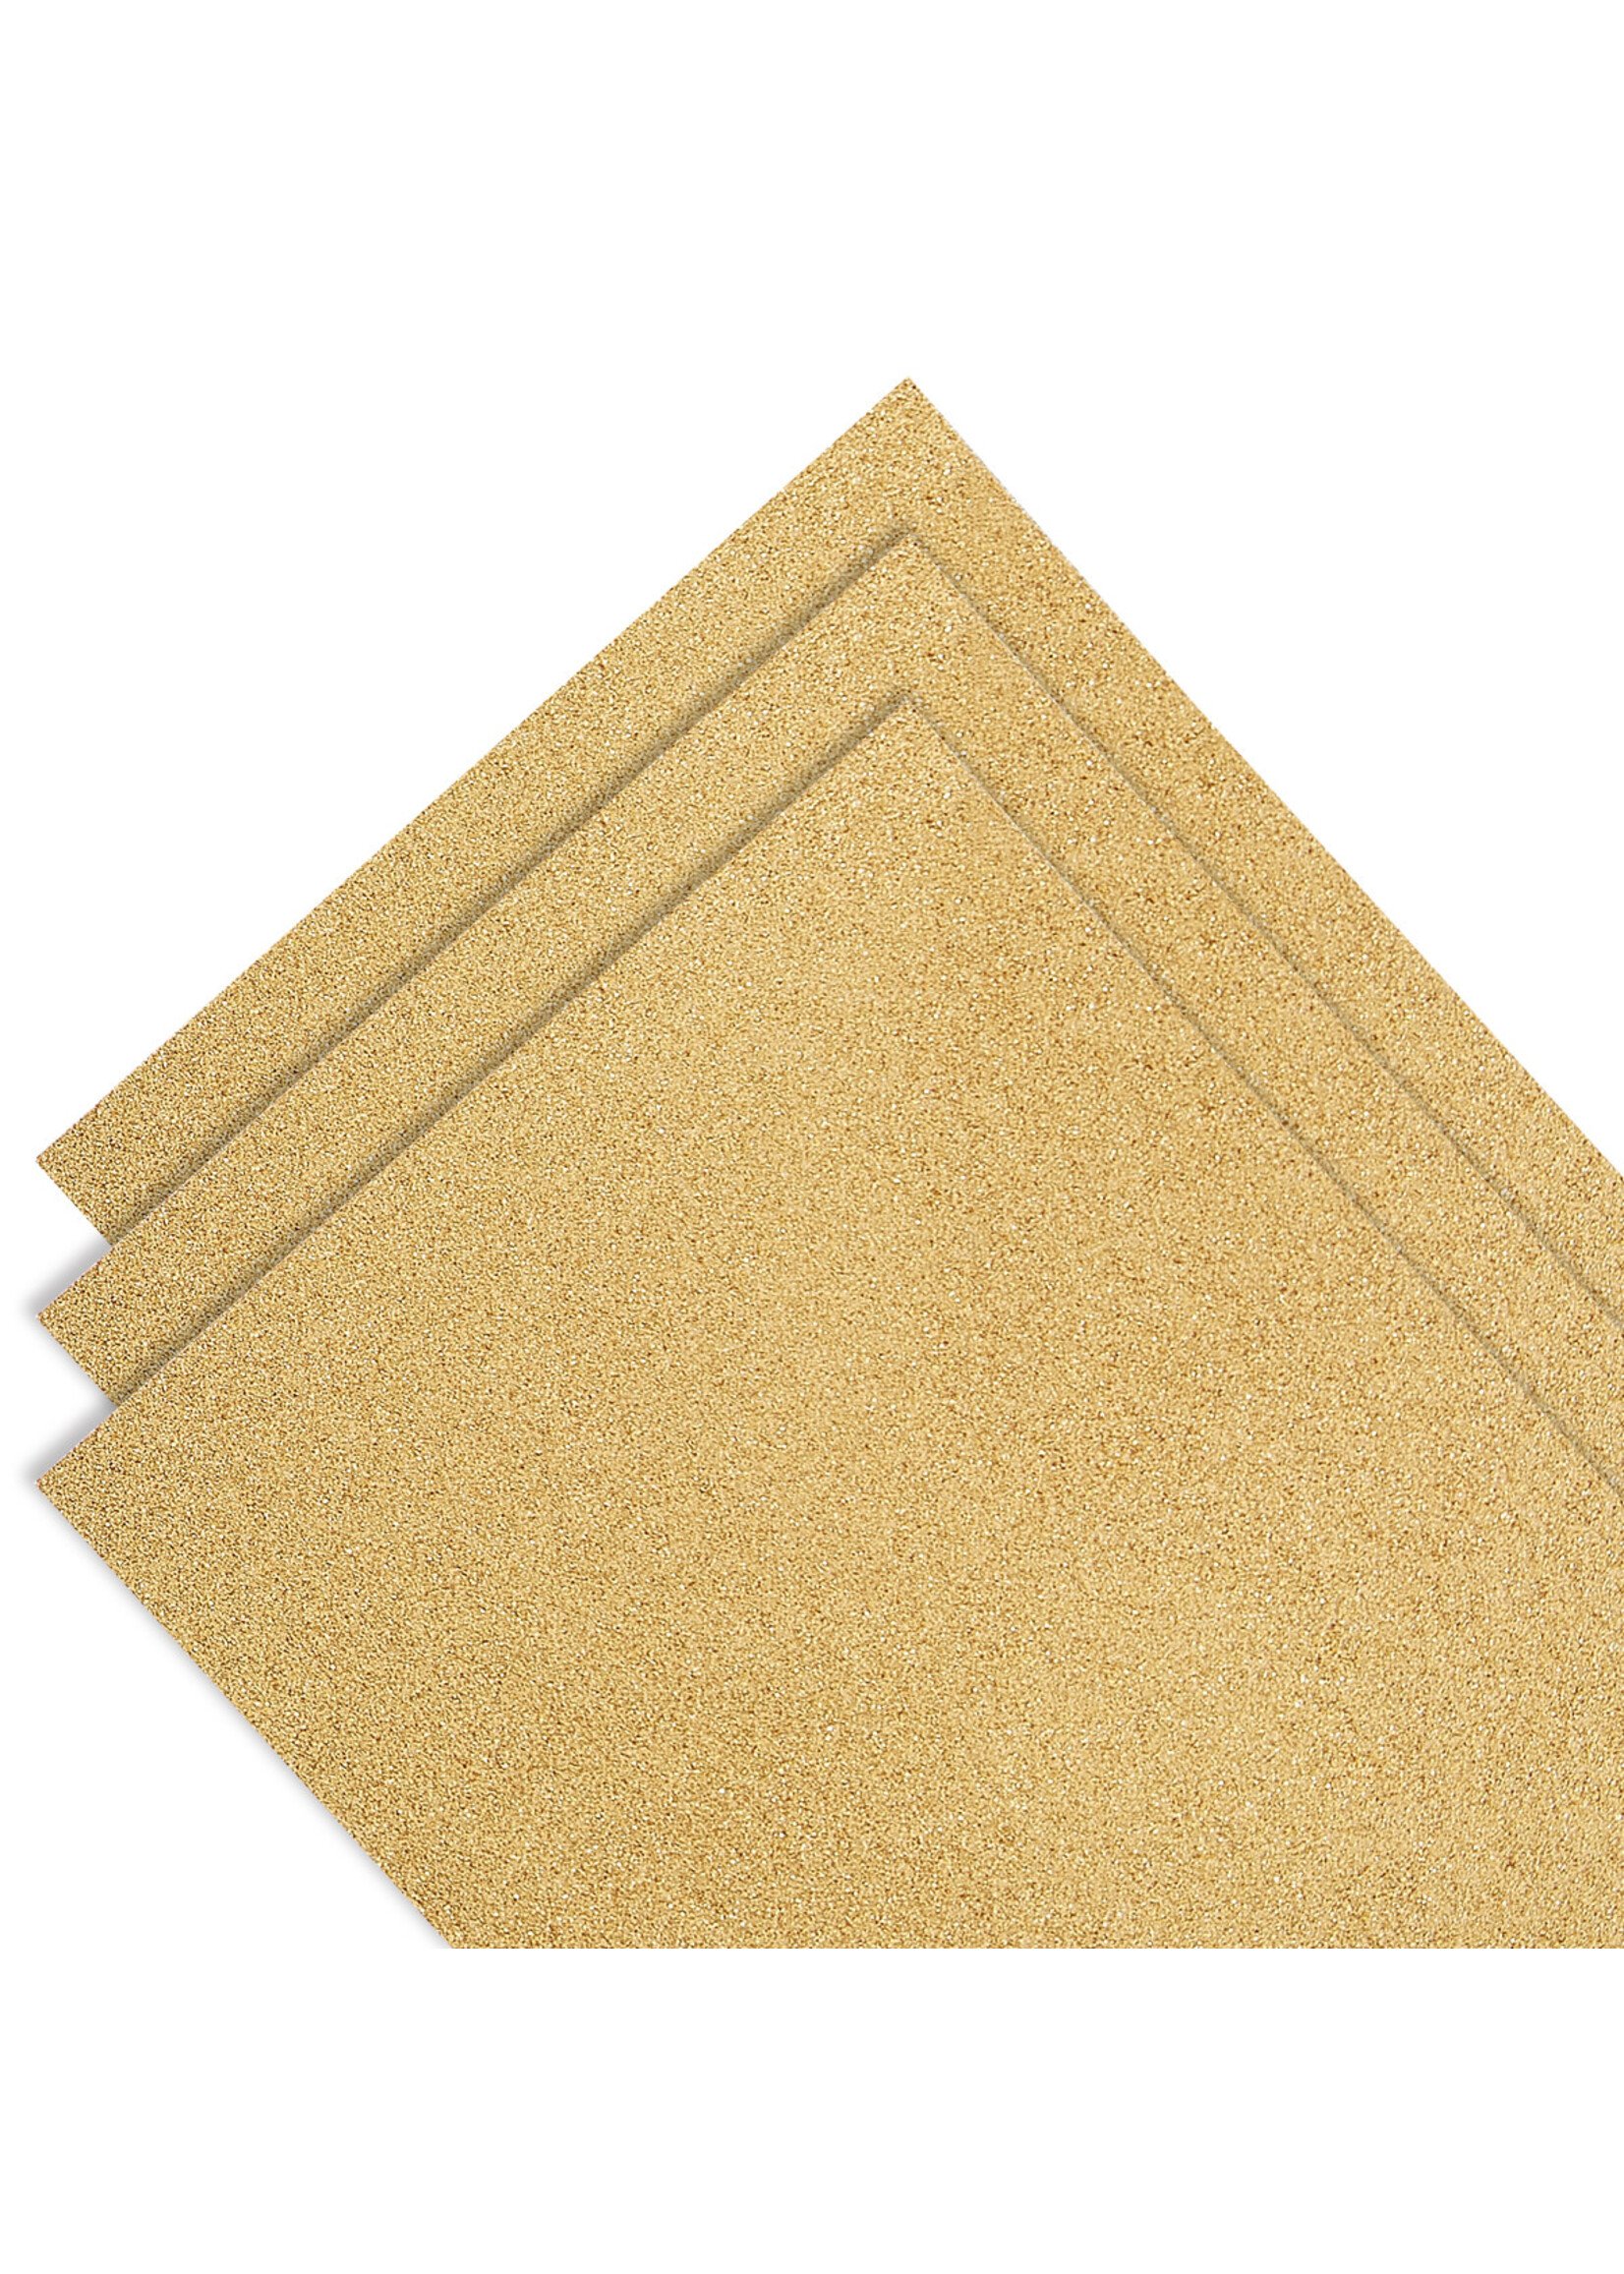 spellbinders Gold Glitter Cardstock 8.5 x 11" - 10 Sheets